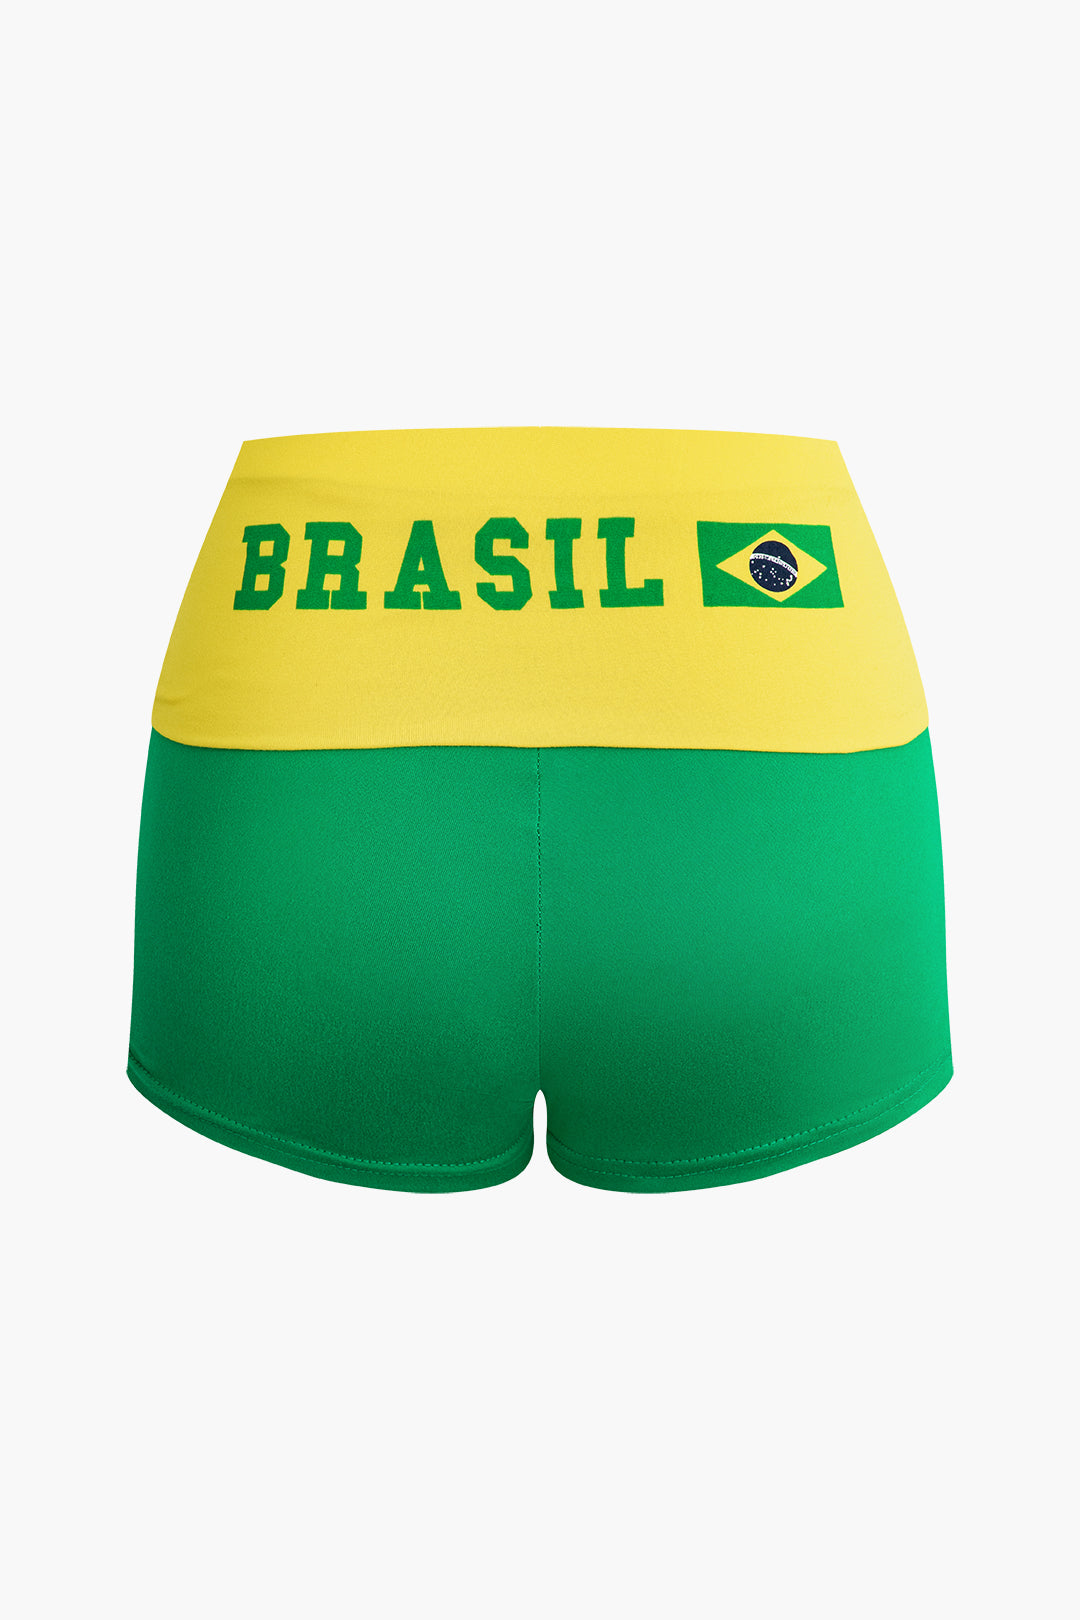 BRASIL Print Contrast Shorts